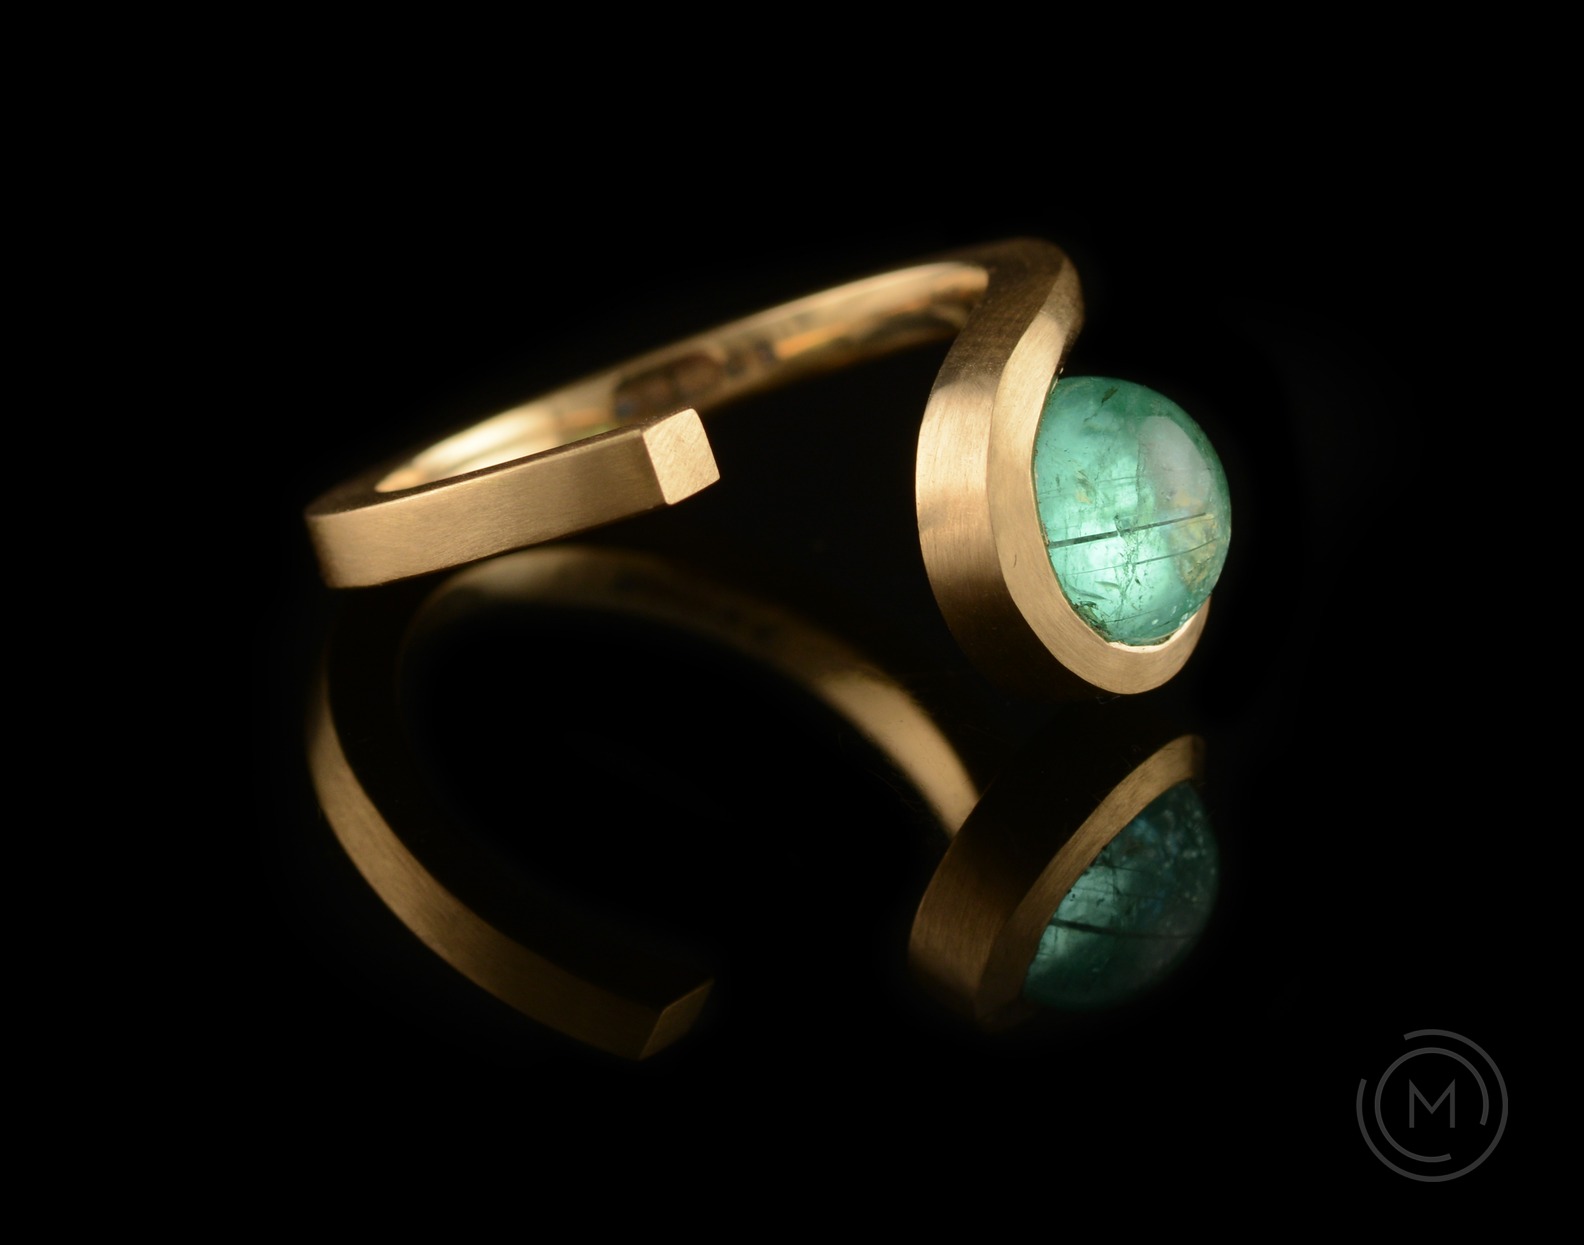 Commission a bespoke Paraiba tourmaline engagement ring